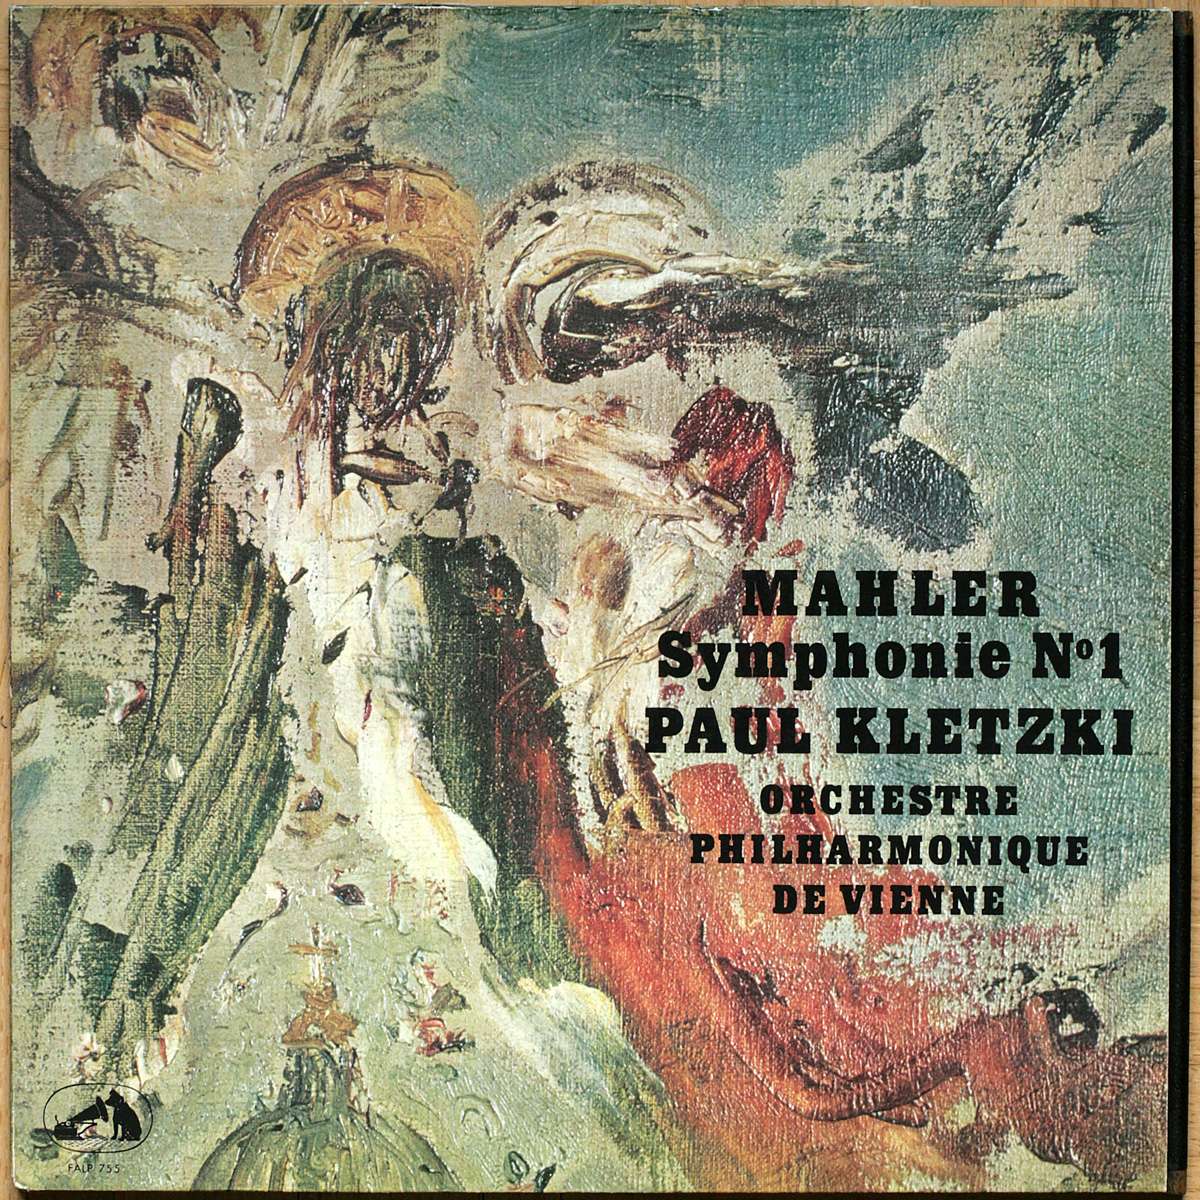 Mahler • Symphonie n° 1 "Titan" • FALP 755 • Wiener Philharmoniker • Paul Kletzki